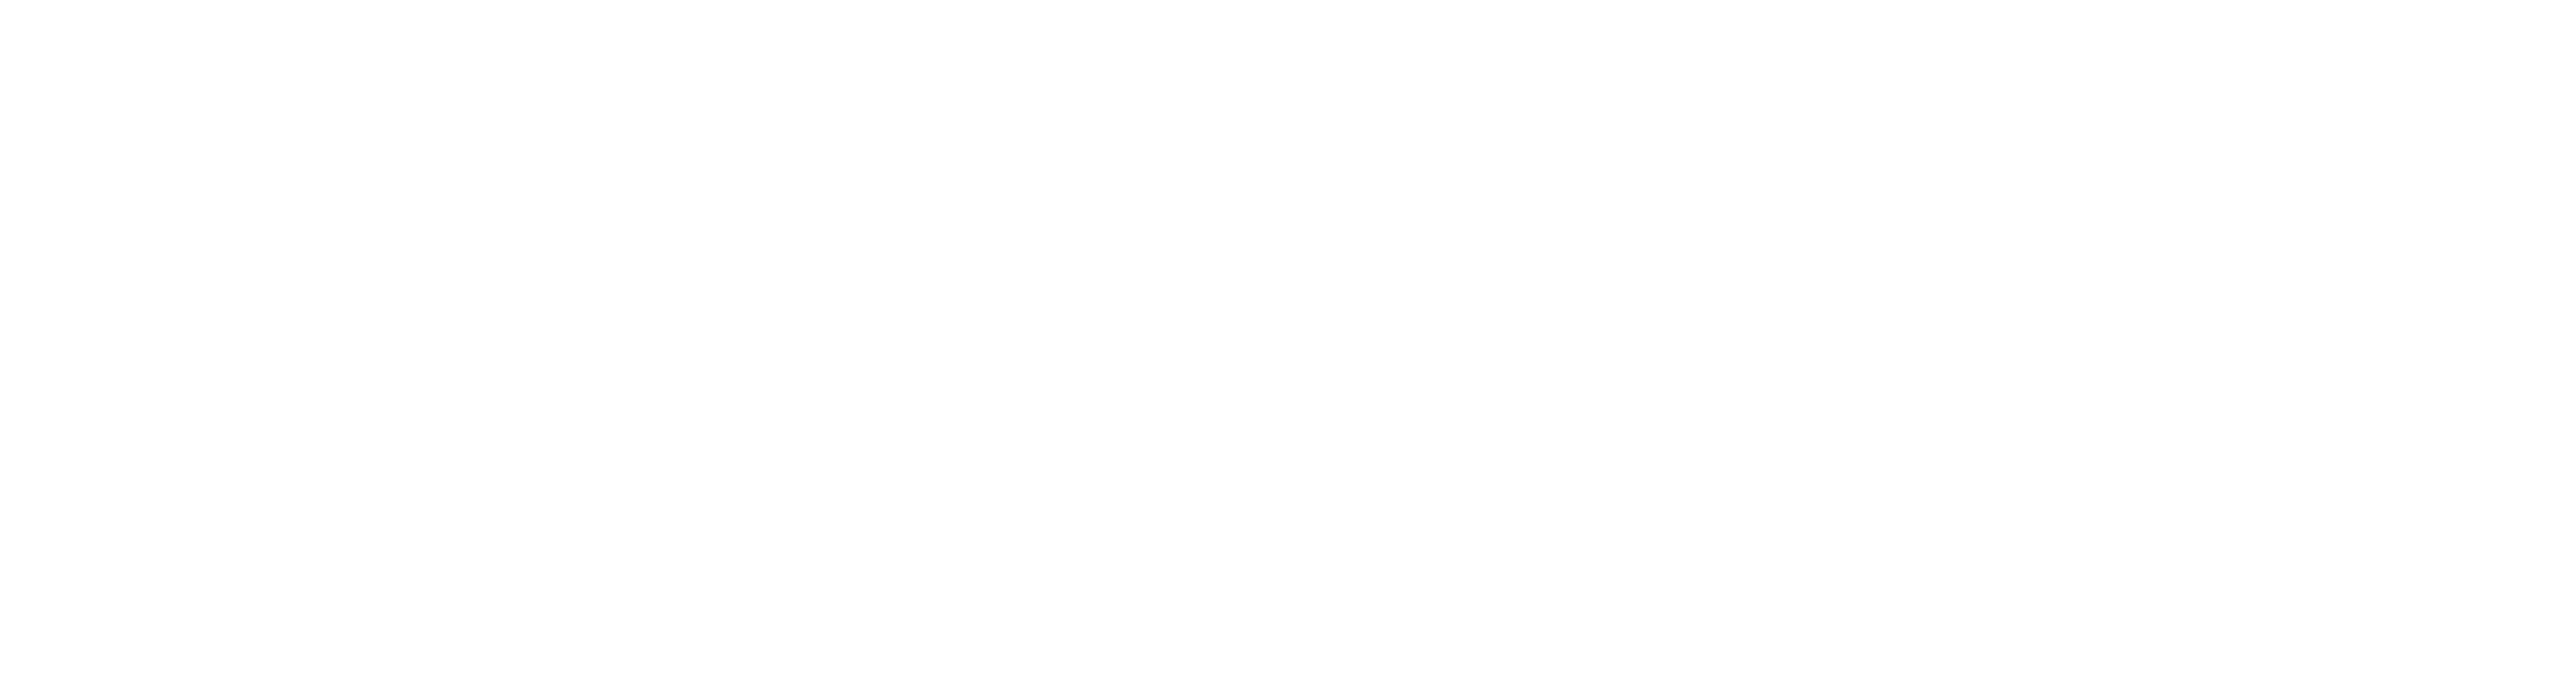 Saf-T-Swim Swim School logo